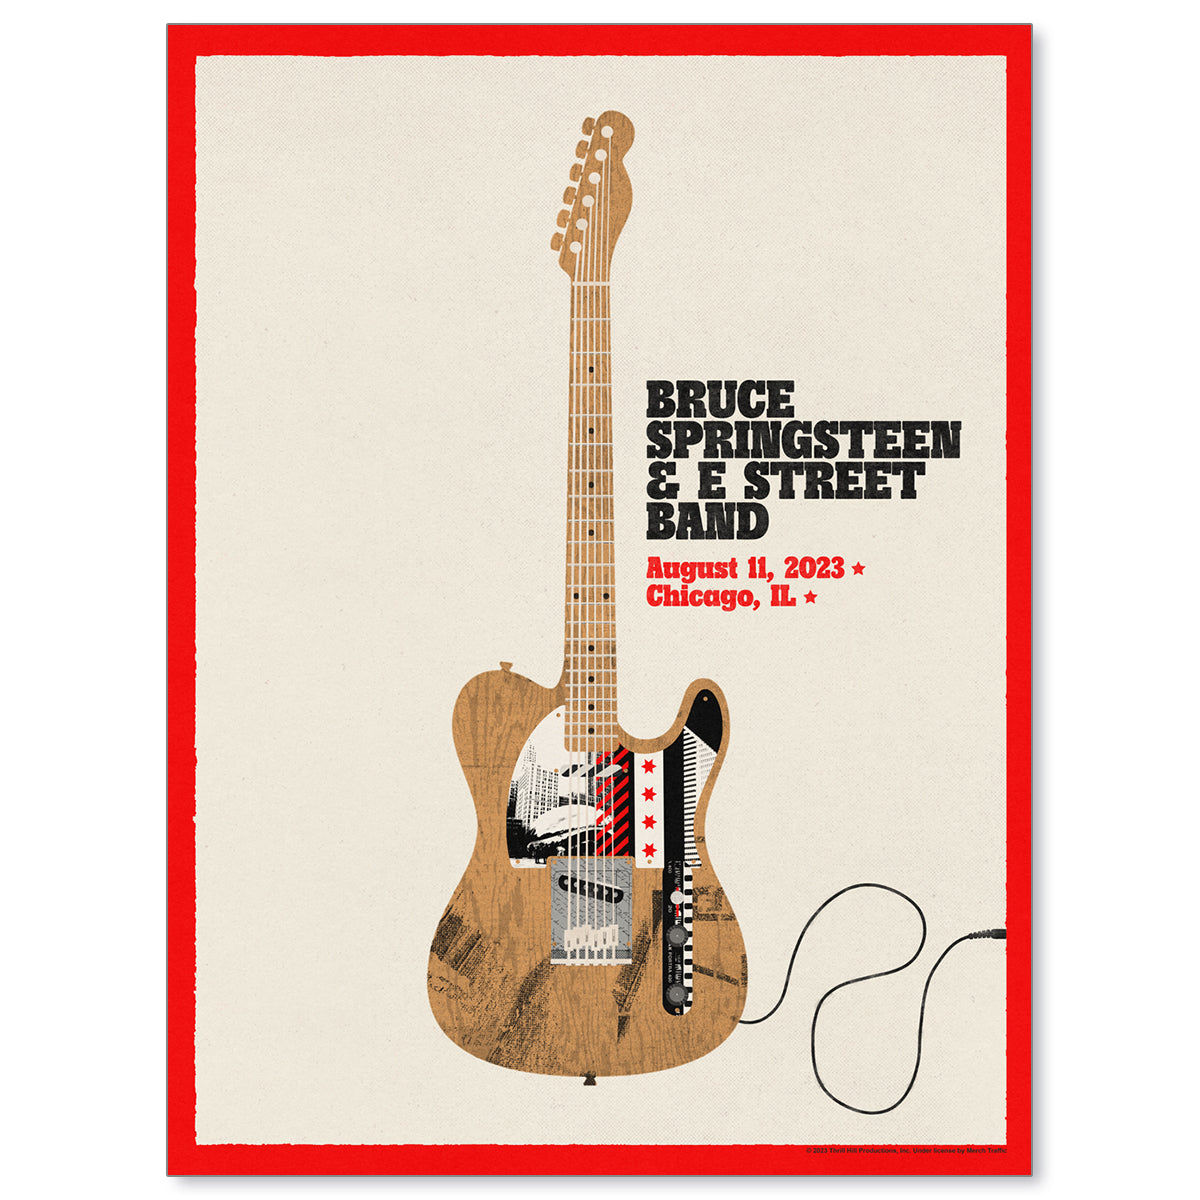 Bruce Springsteen & E Street Band Chicago August 11, 2023